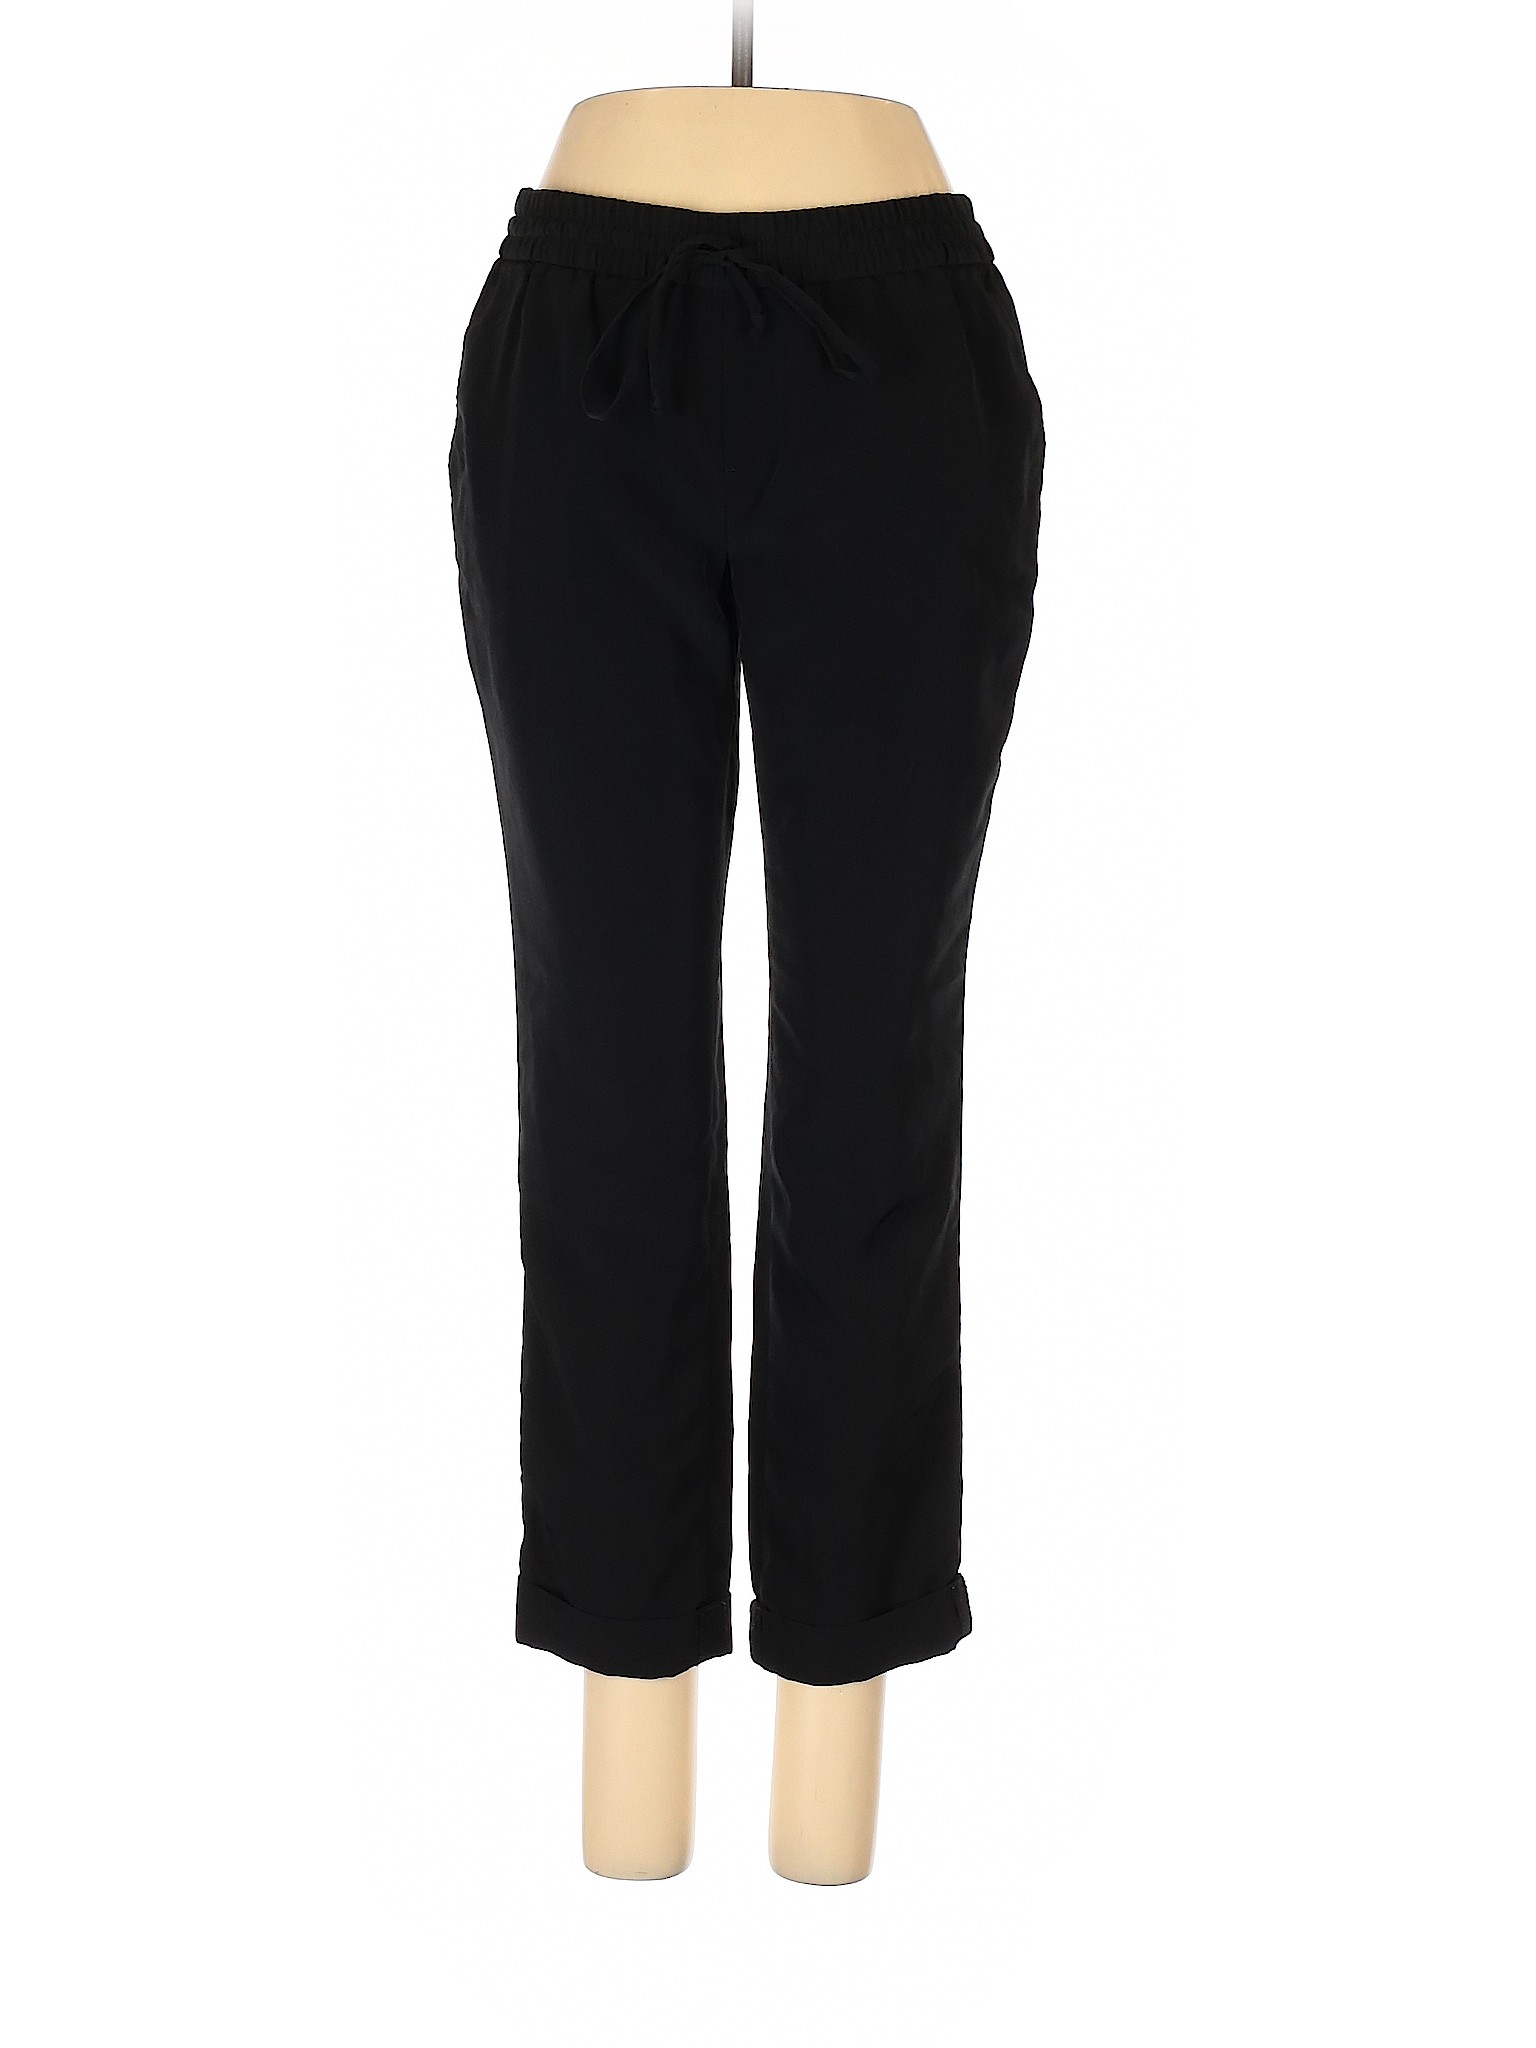 Banana Republic Women Black Casual Pants S Petites | eBay